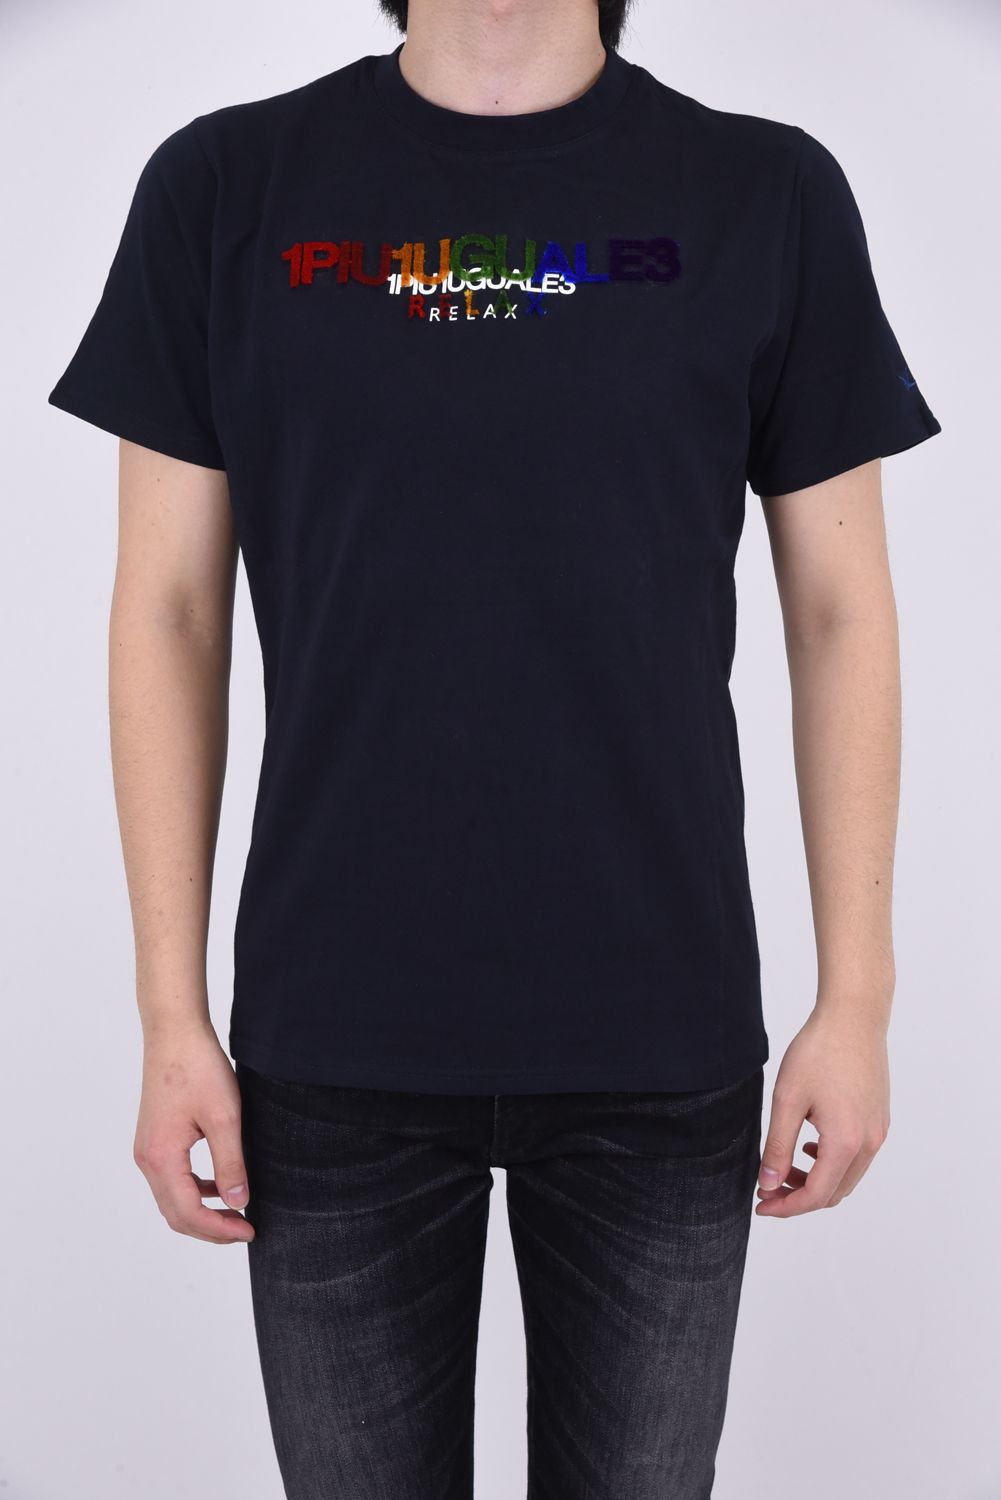 1piu1uguale3 Relax Rainbow Embroidery Logo T レインボー 3dロゴ Tシャツ ブラック Gossip